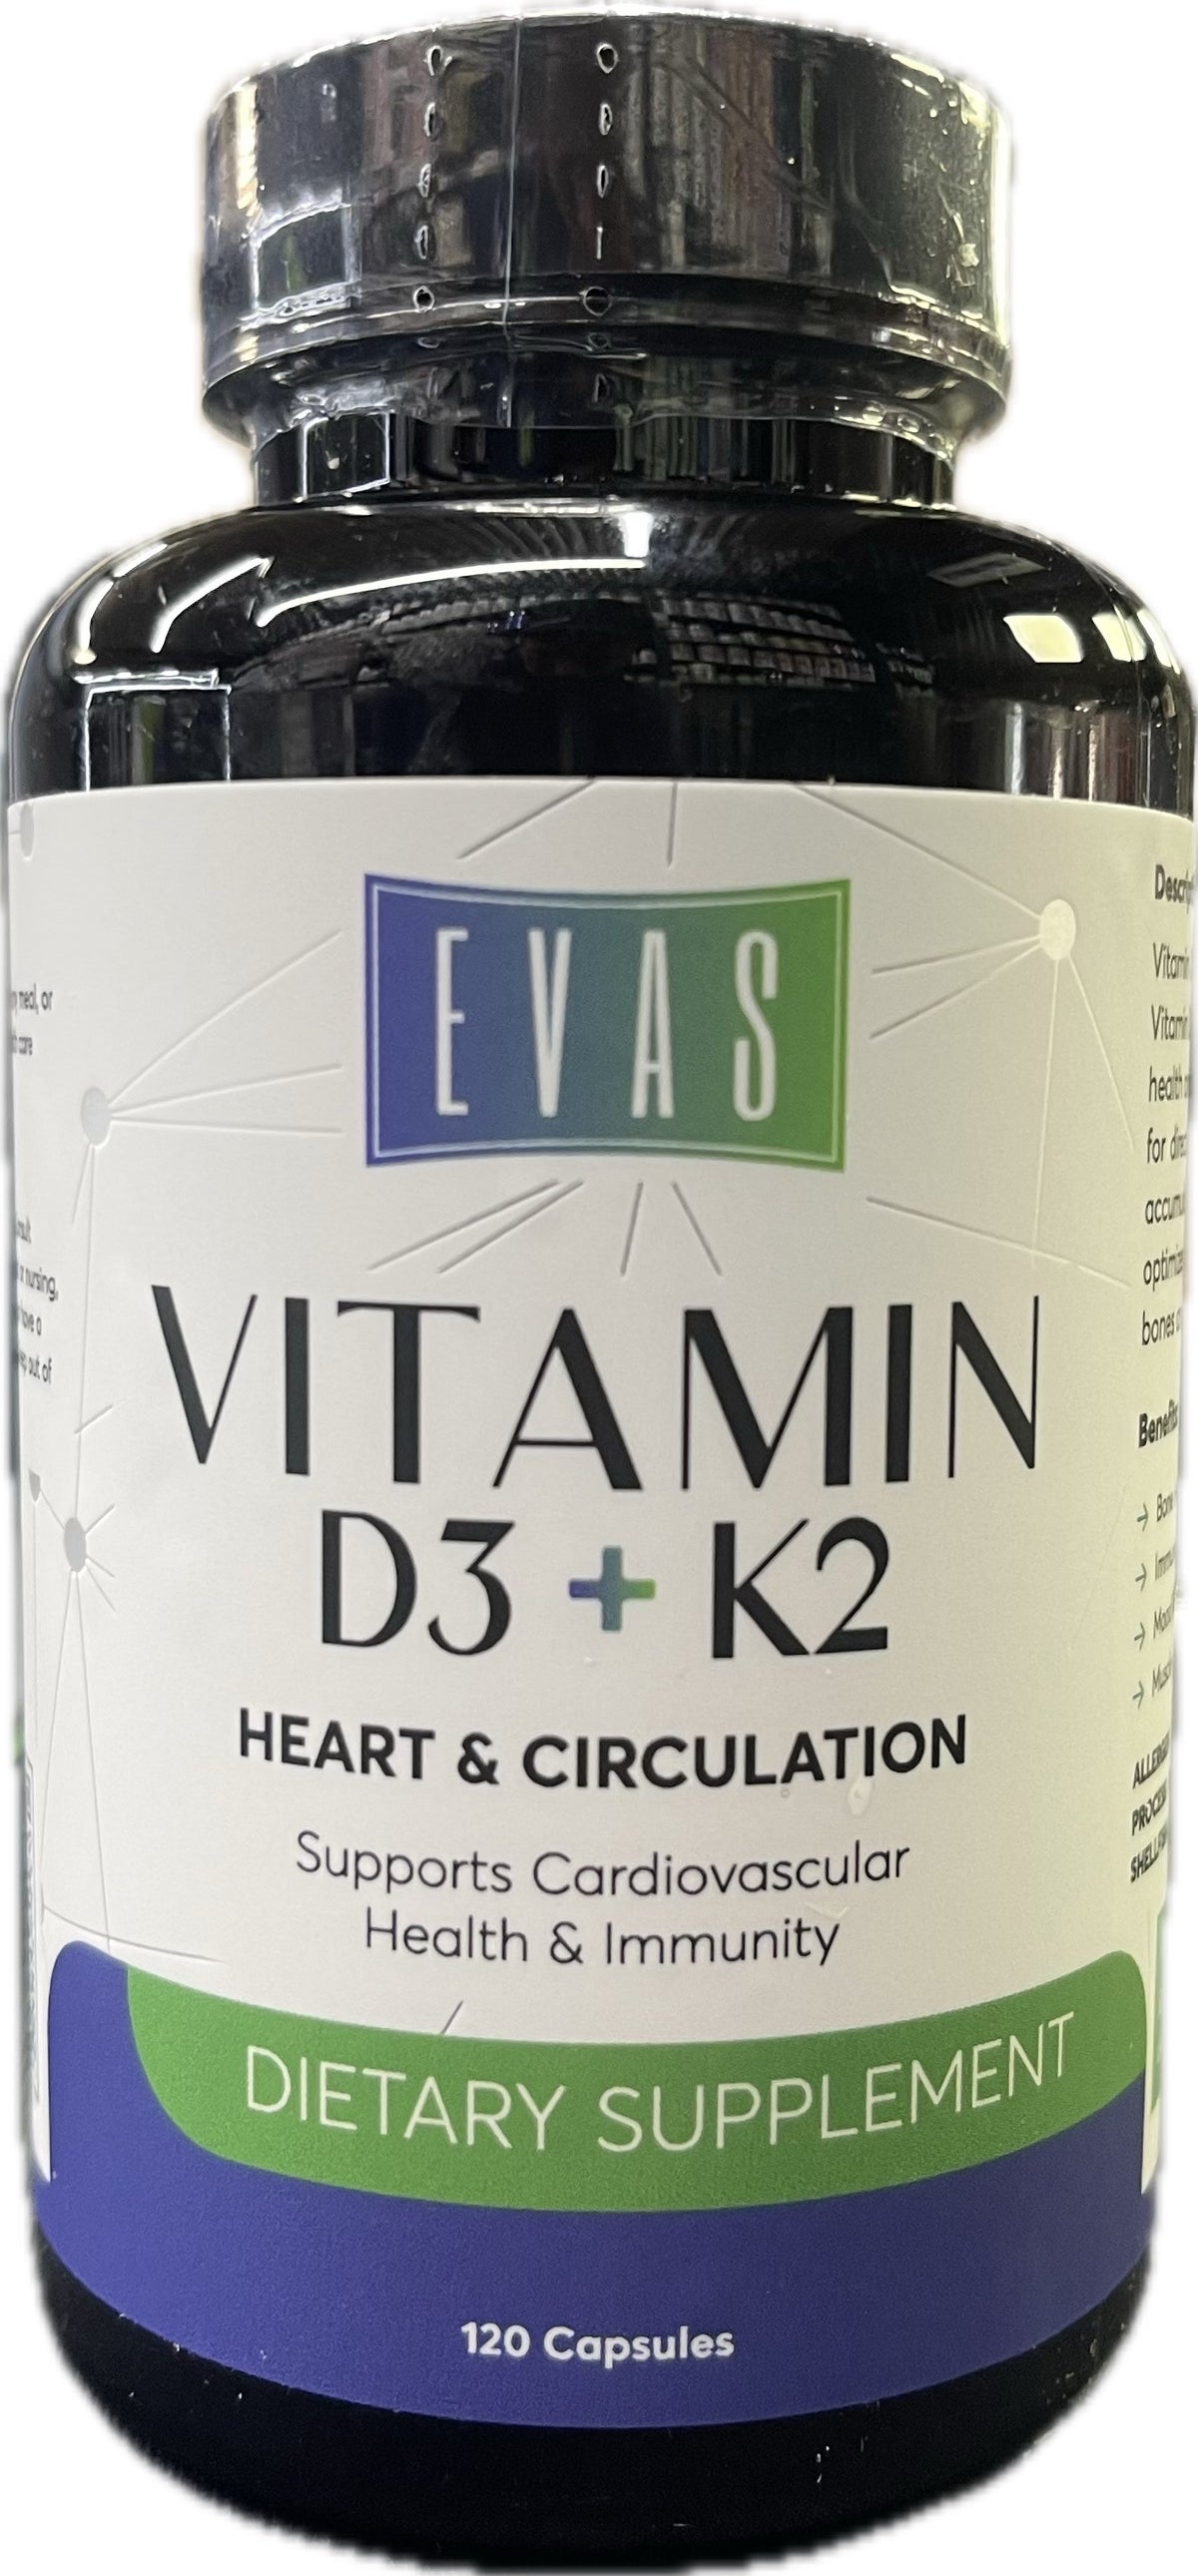 EVAS - Vitamin D3 + K2 (120 Serv)